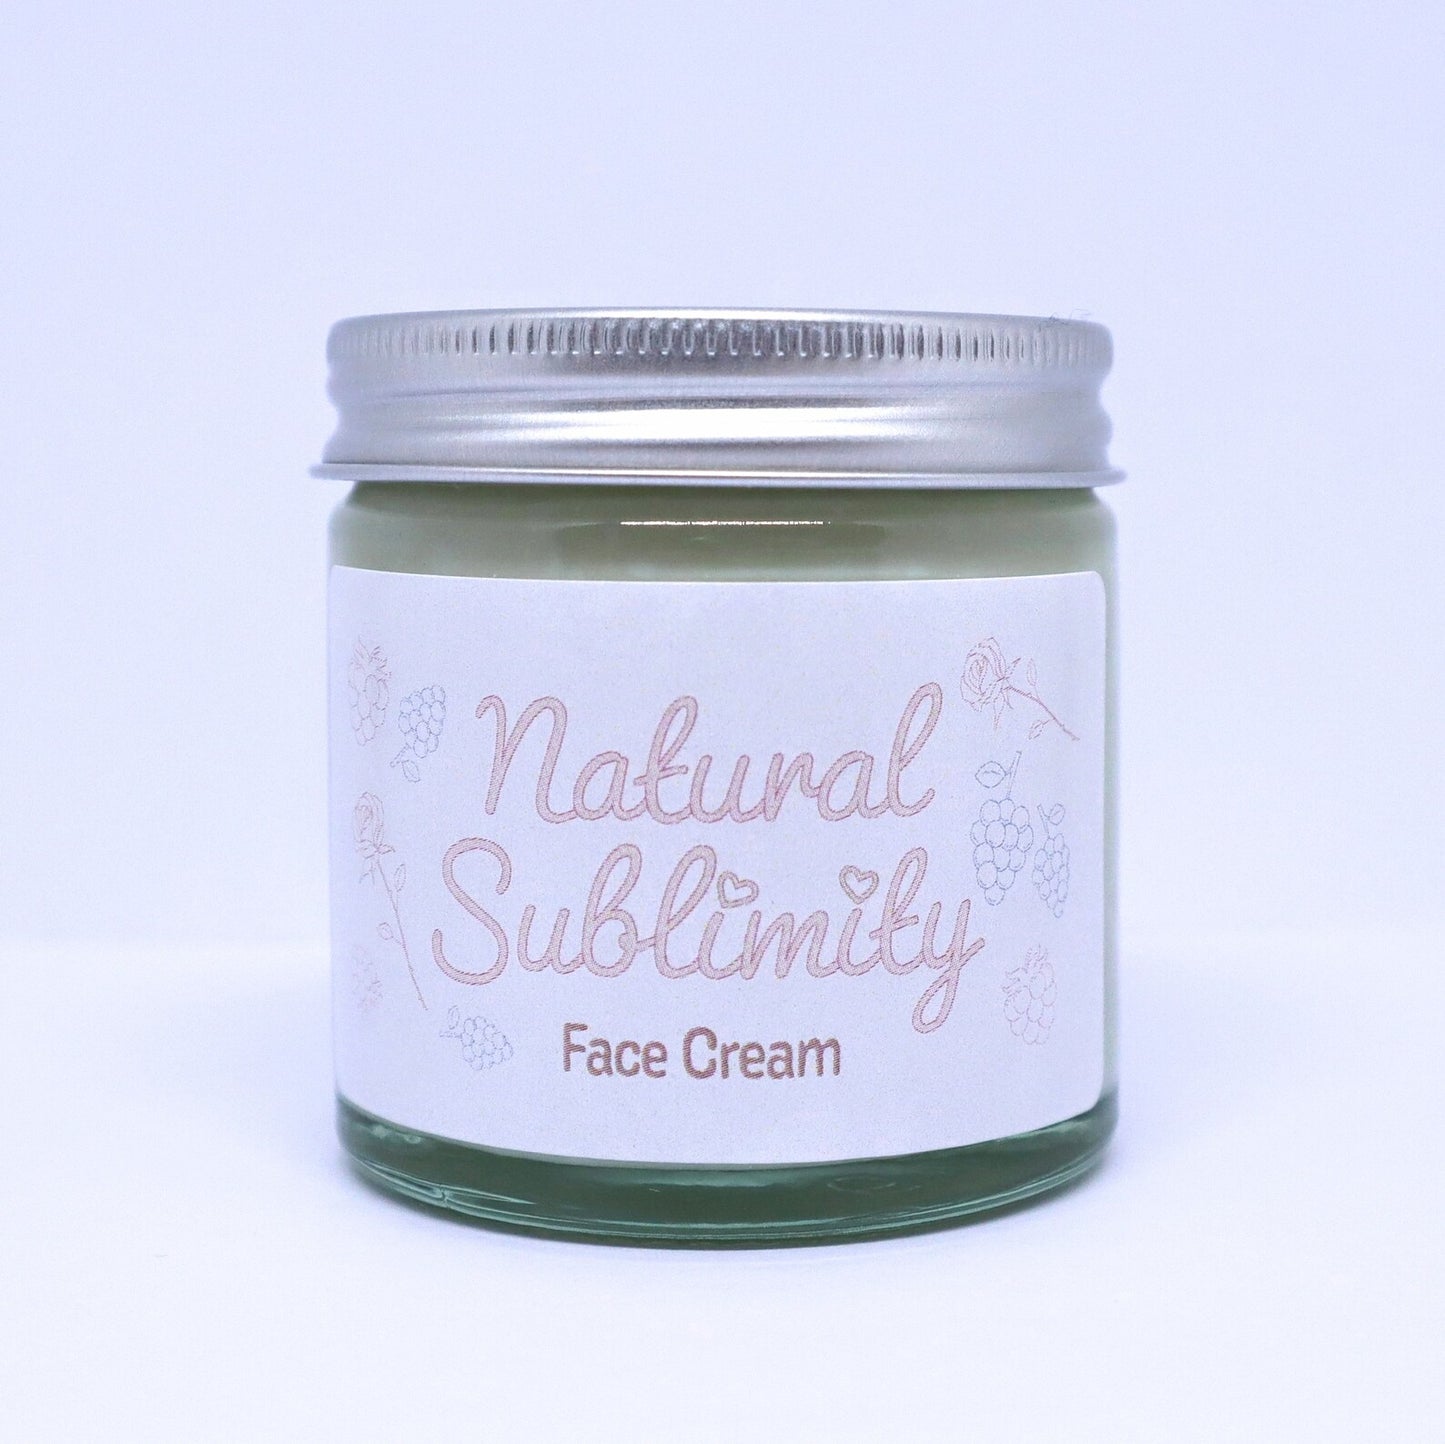 Natural Sublimity Face Moisturiser Cream